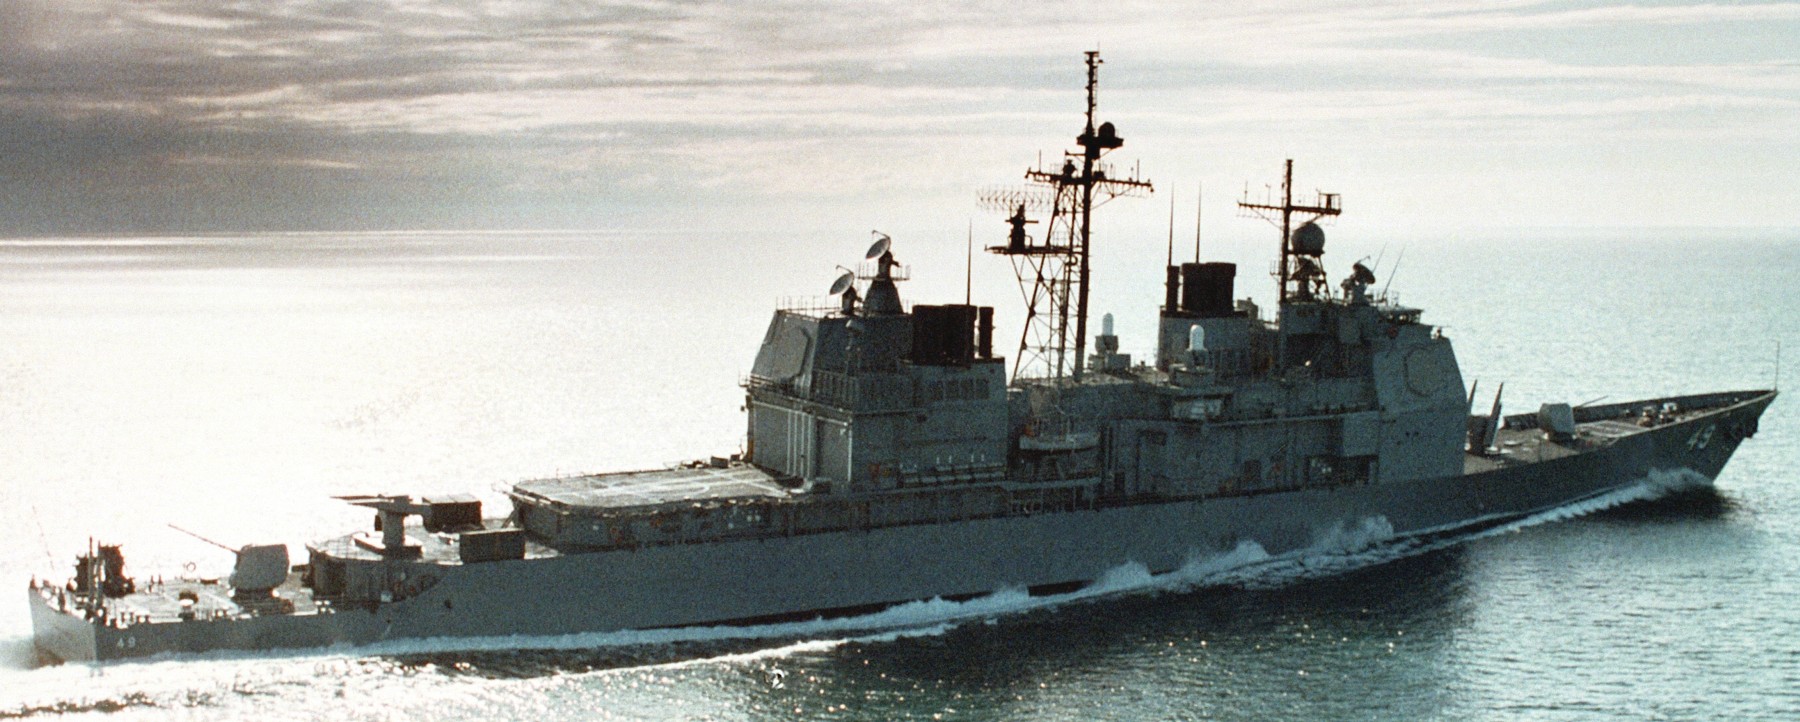 cg-49 uss vincennes ticonderoga class guided missile cruiser aegis us navy 43